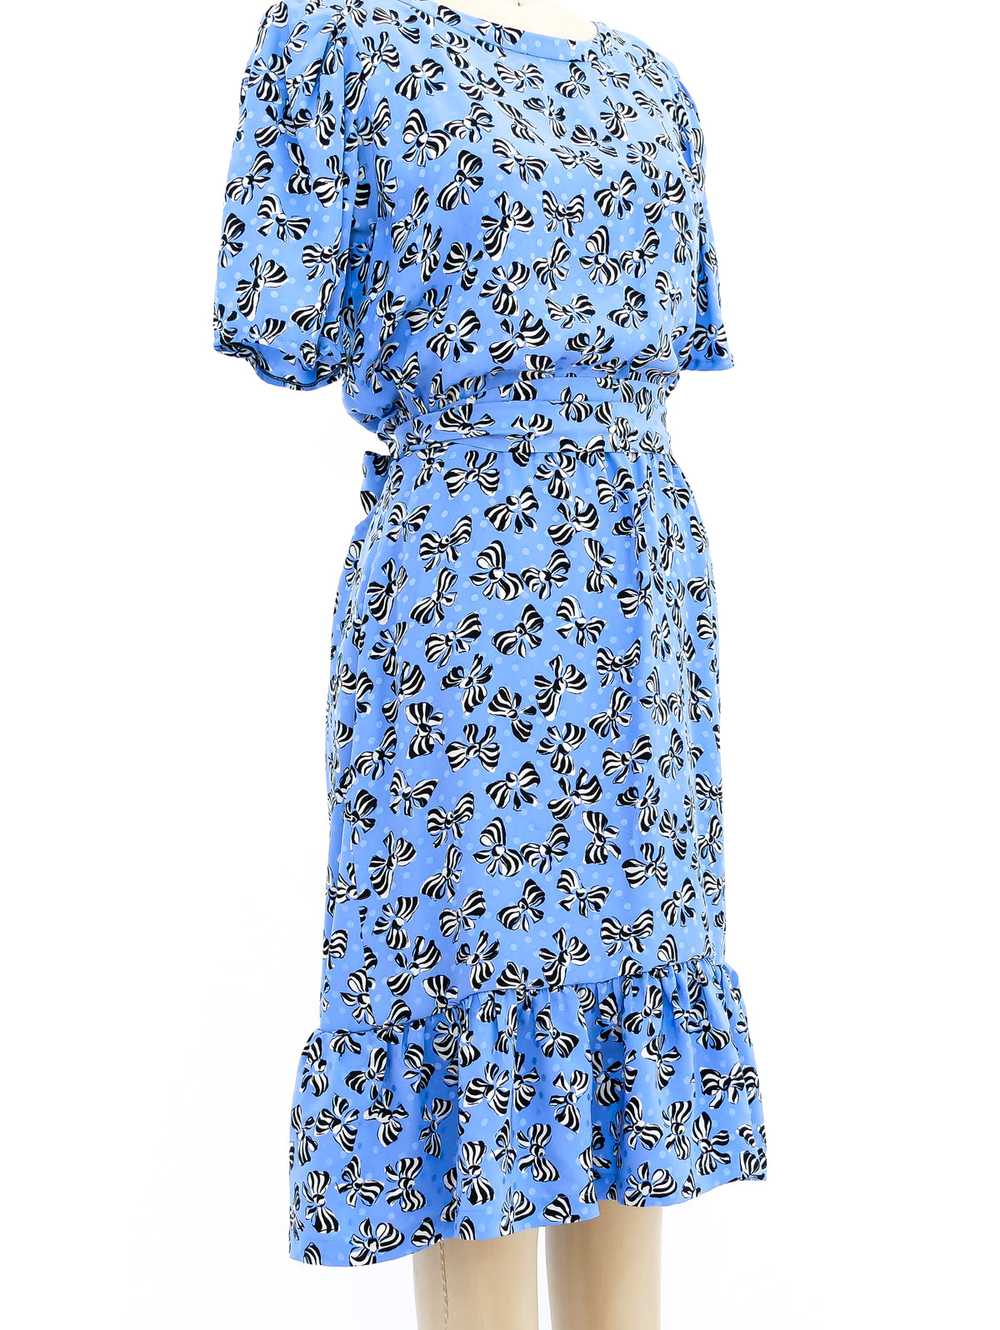 Yves Saint Laurent Bow Print Dress - image 5